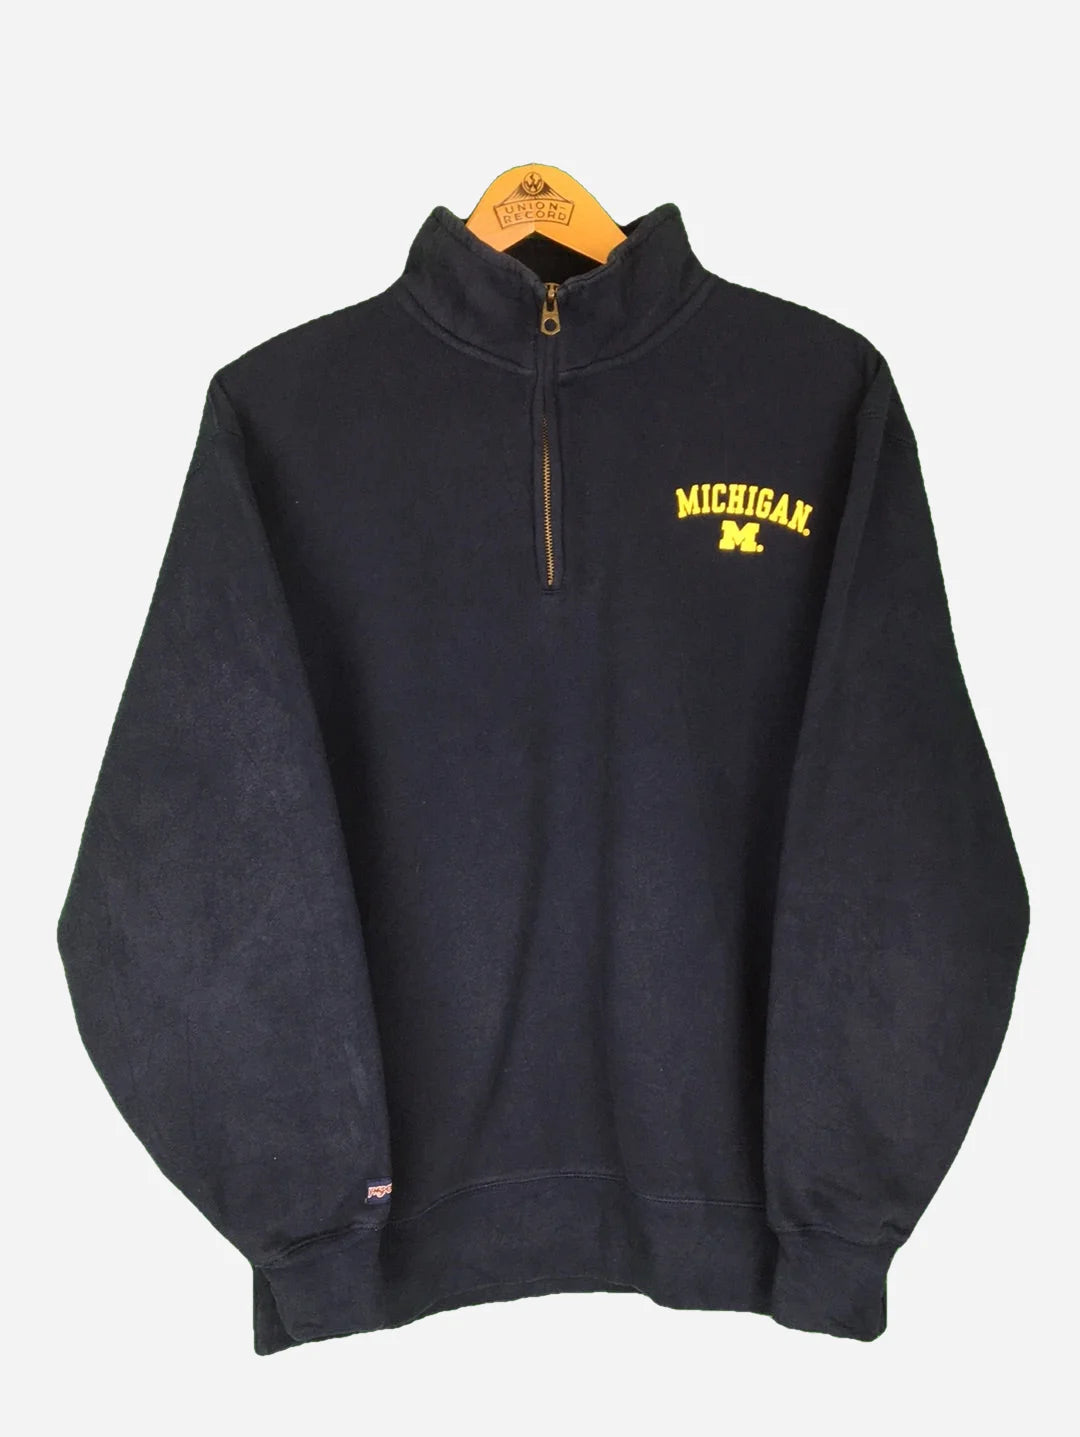 "Michigan" Sweater (M)